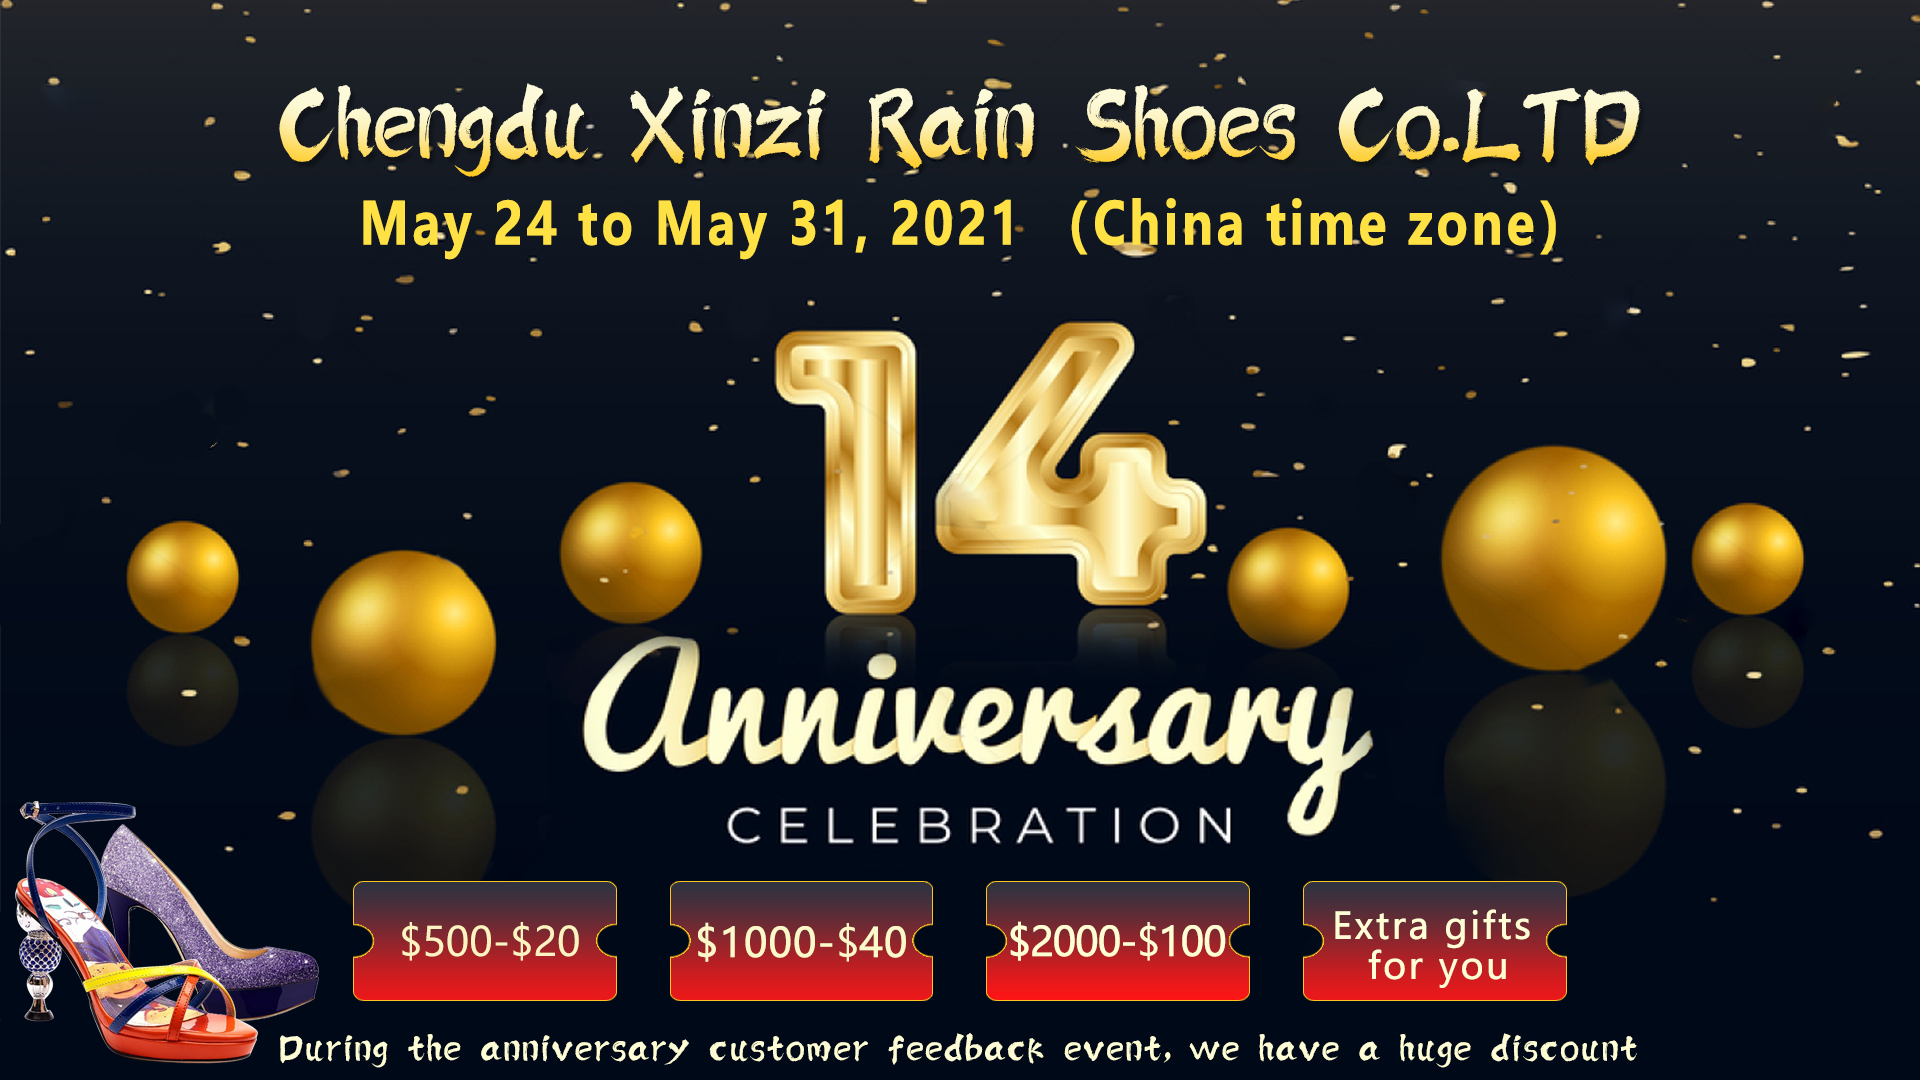 Xinzi Rain Shoes Co. , Ltd., faha-14 taona